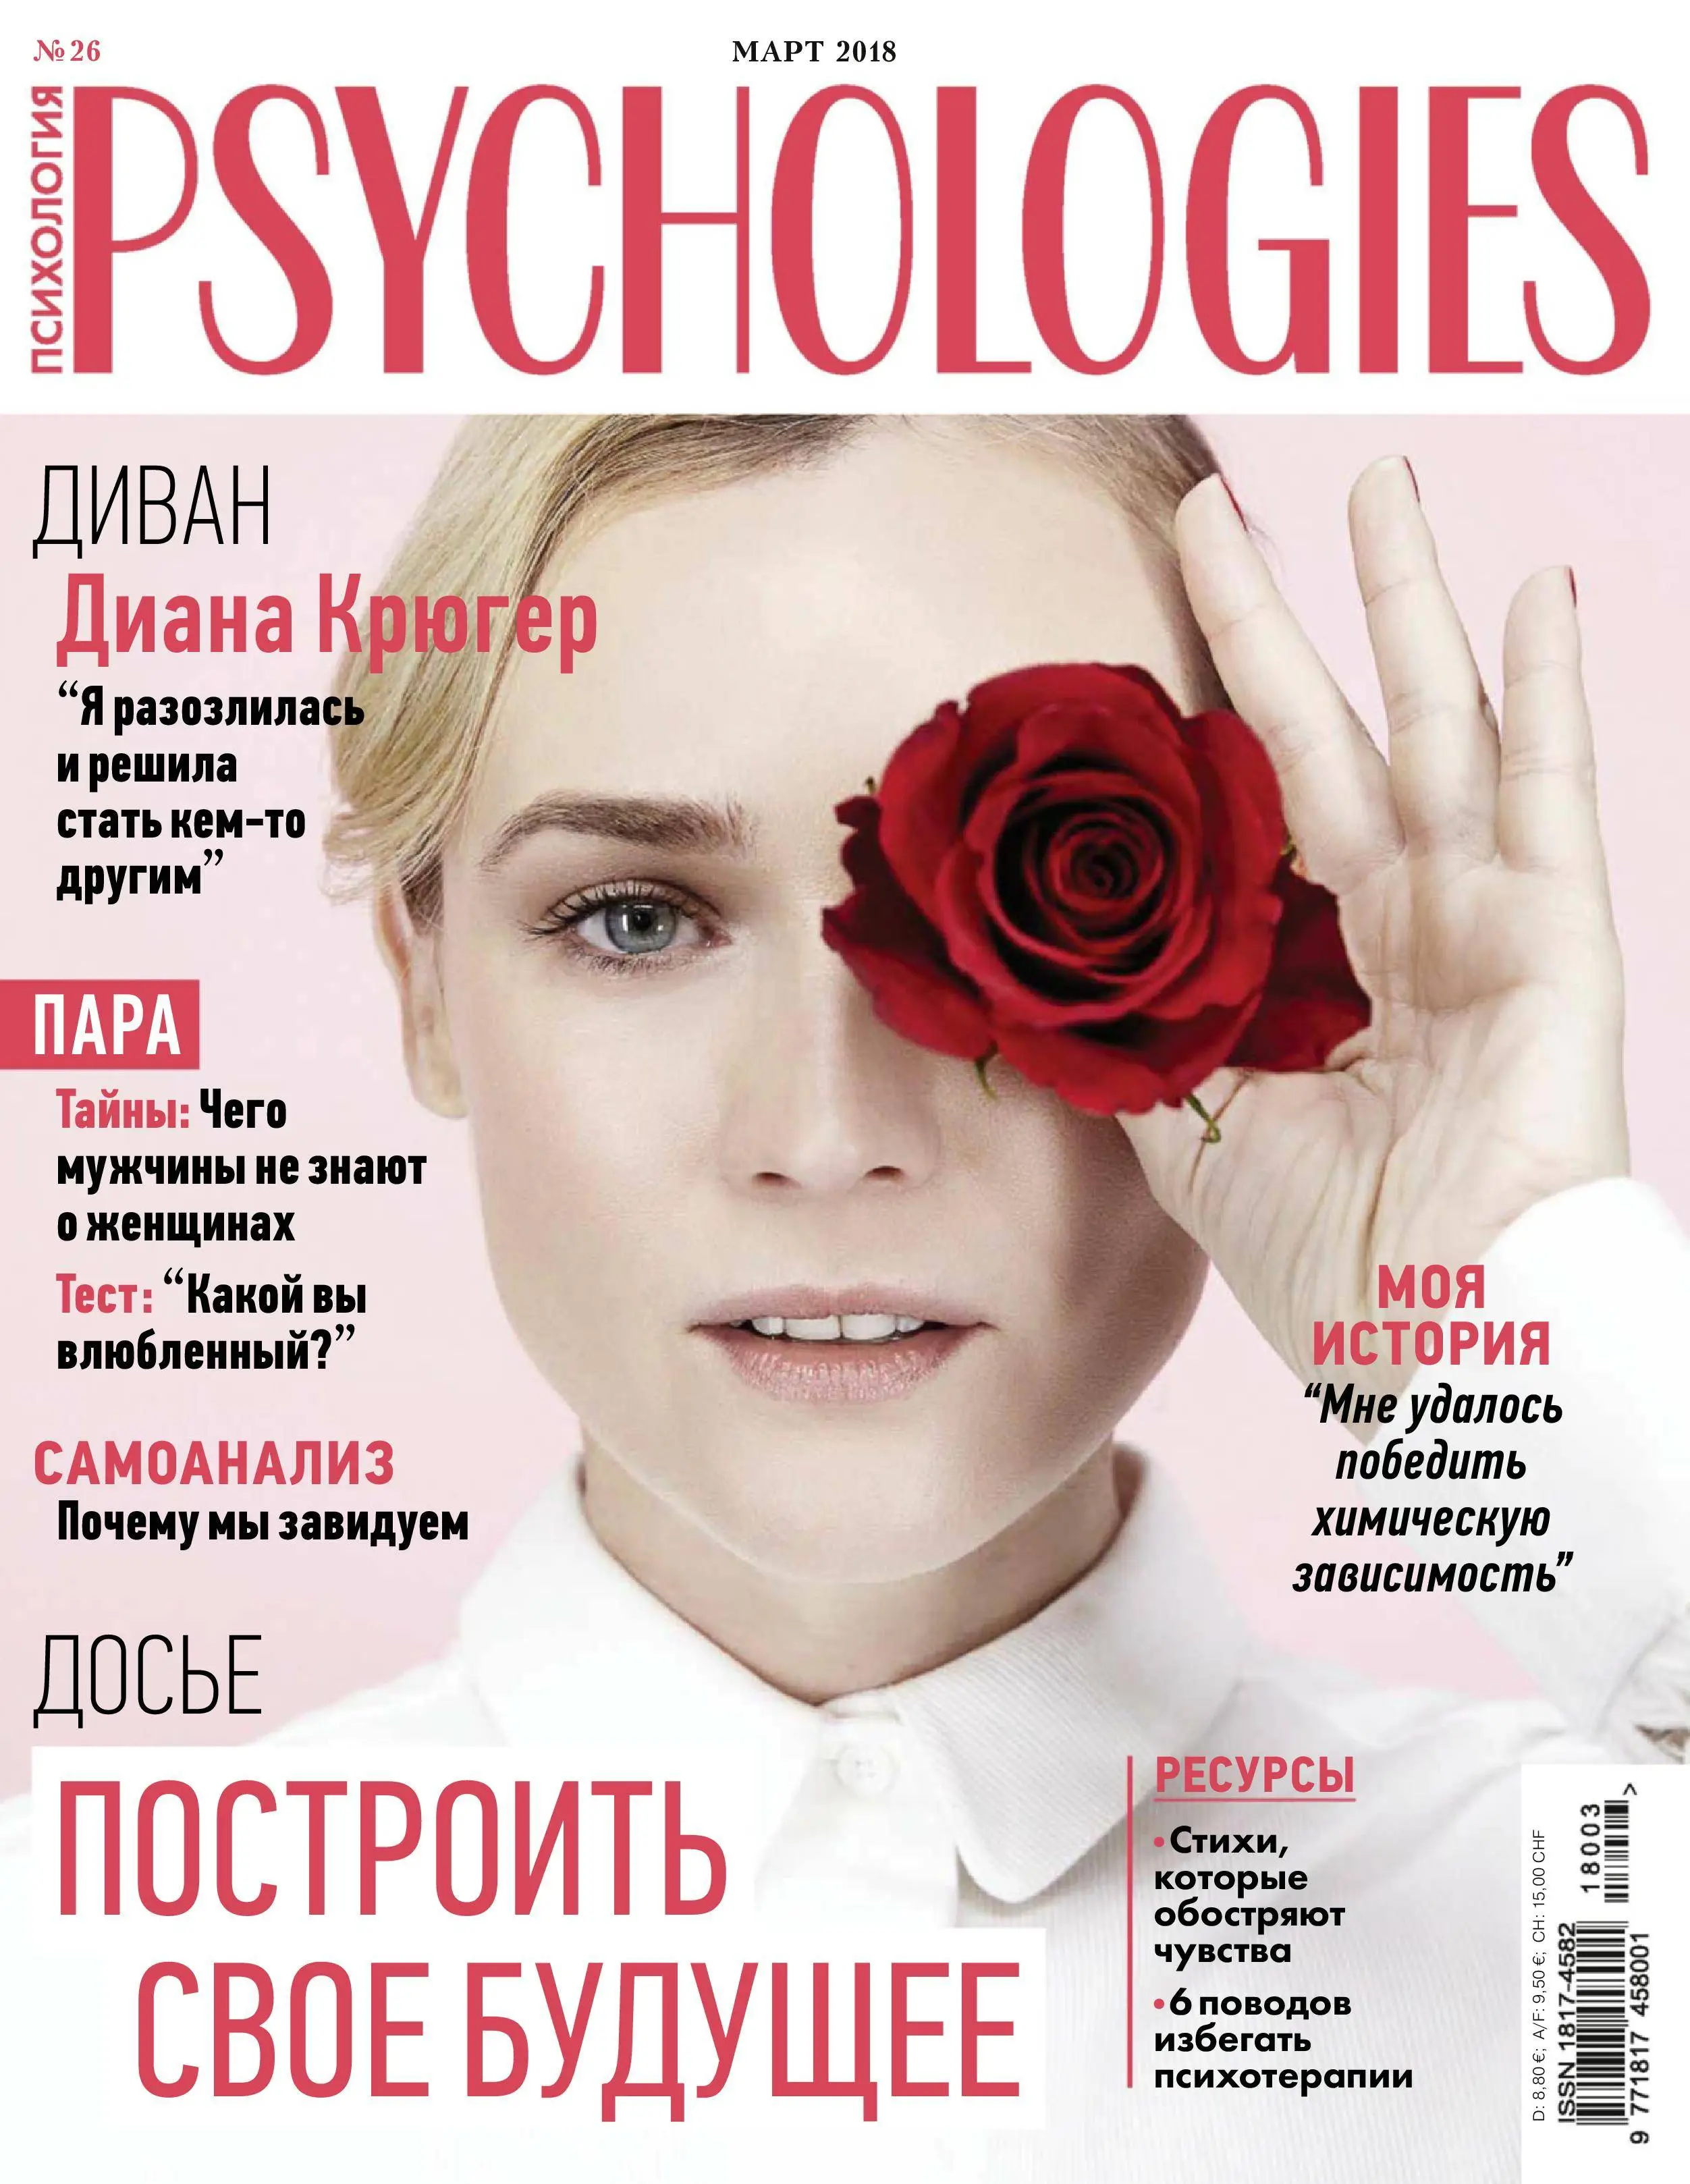 Журнал психоанализ. Журнал психология. Обложка журнала Psychologies. Журнал по психологии. Журнал Психолоджи.